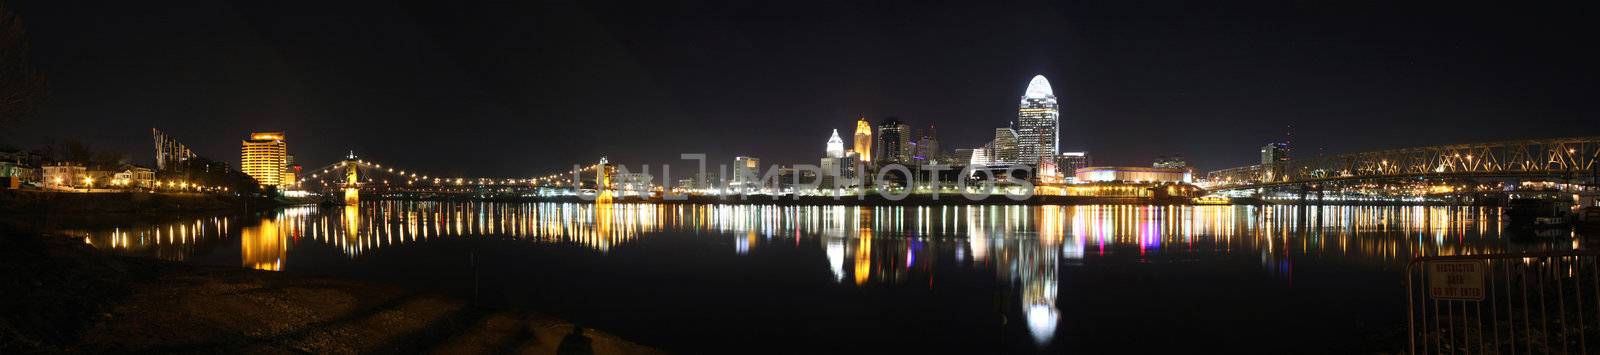 Panorama, Cincinnati Skyline by mahnken